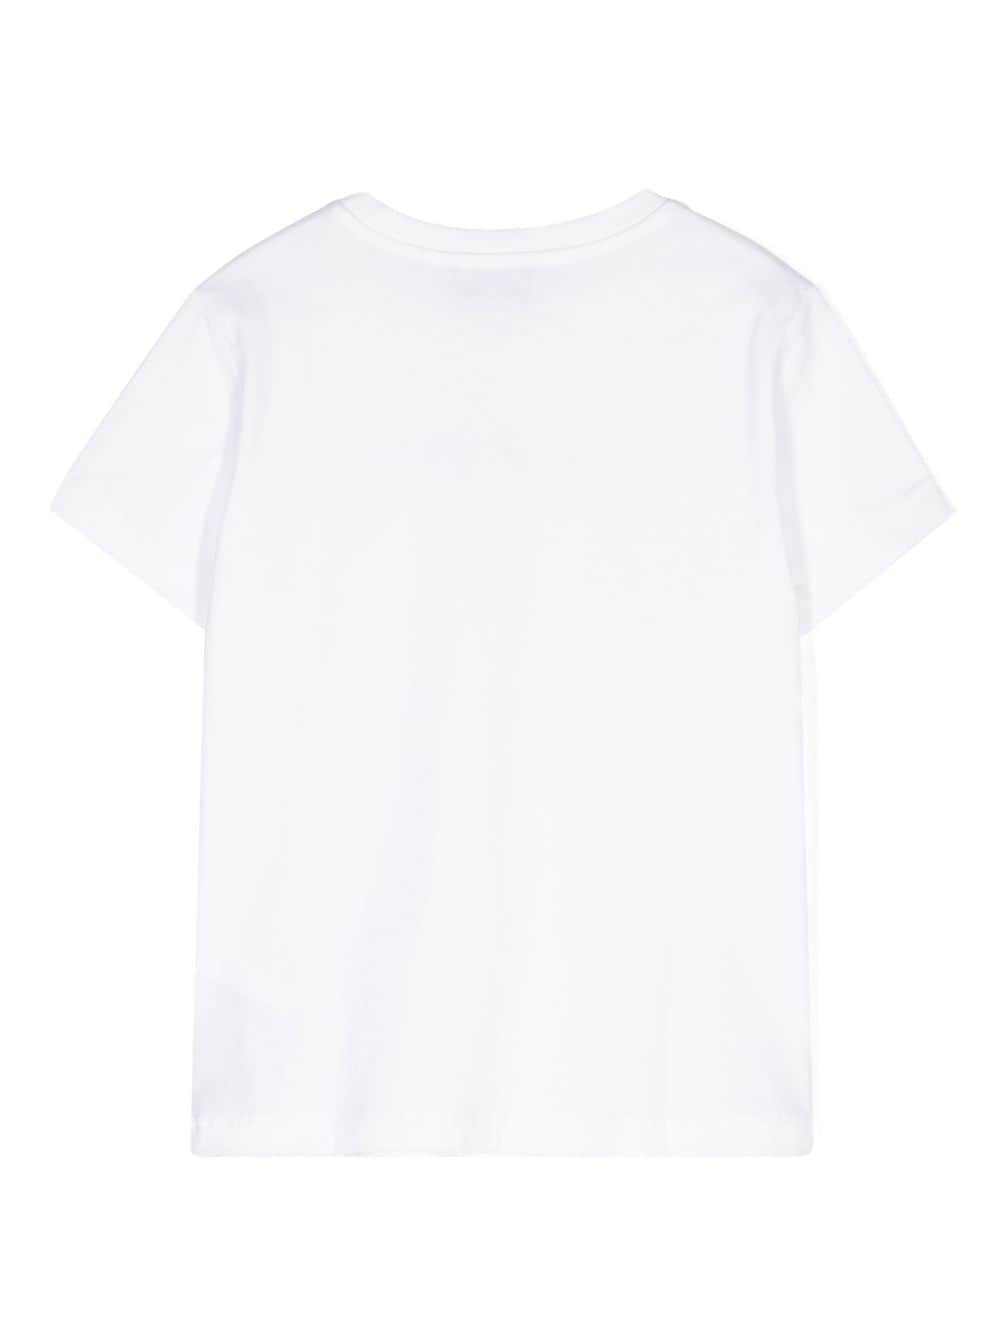 T-shirt unisex in cotone bianca